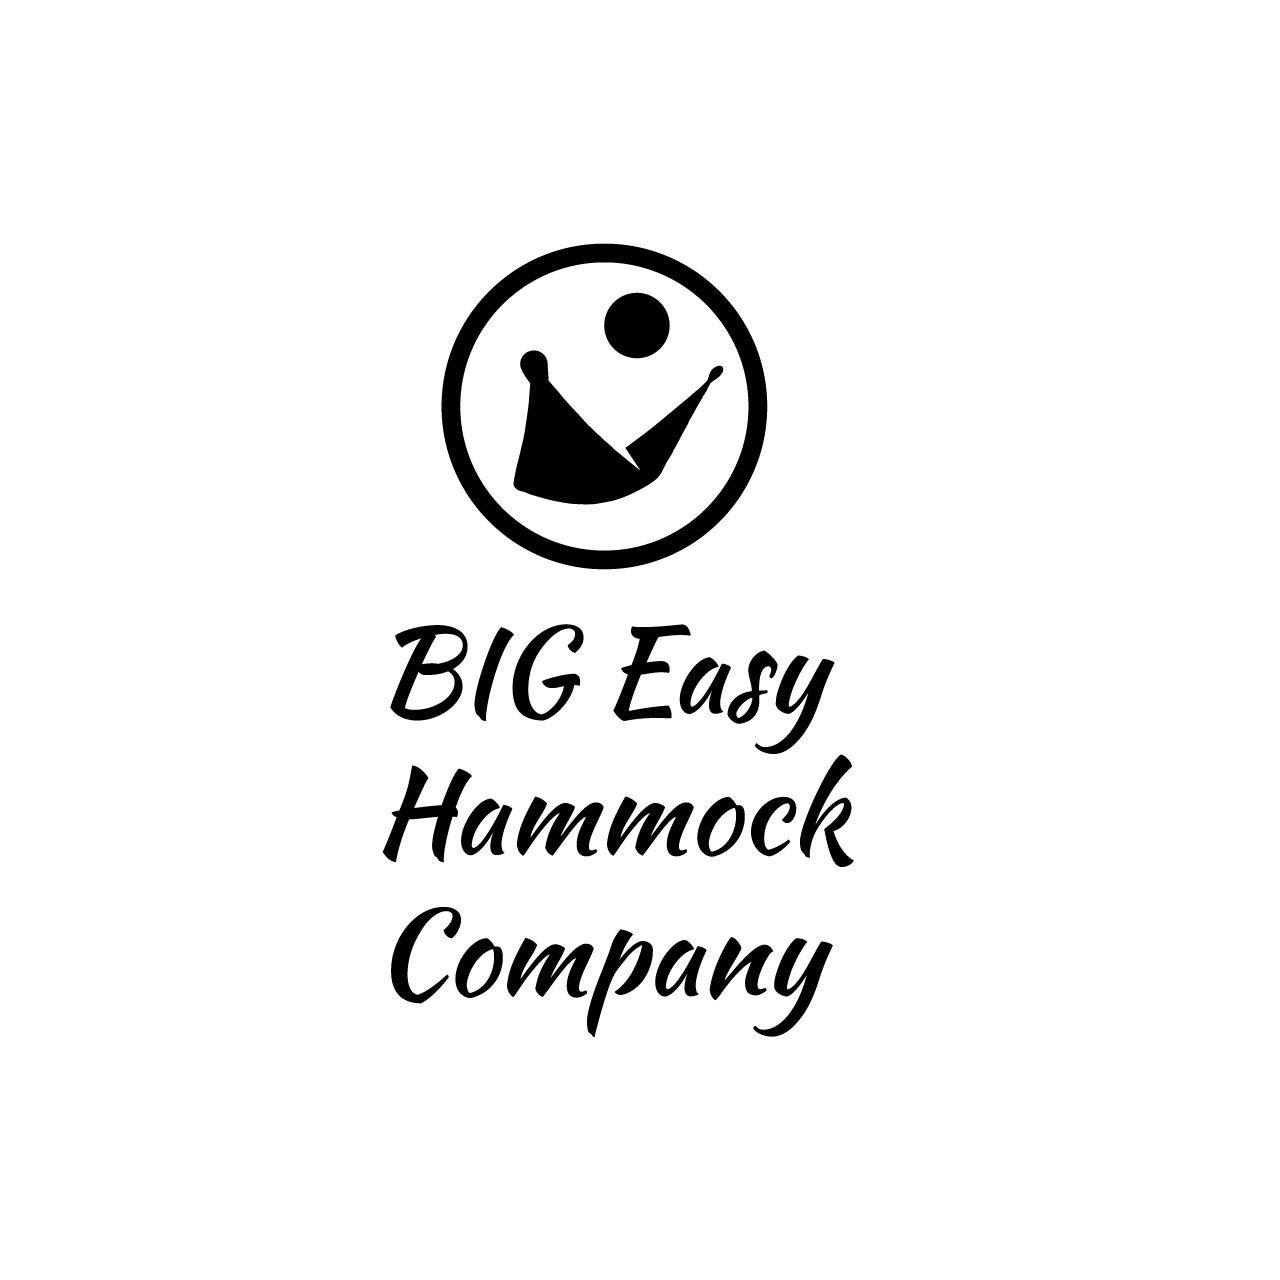 Easy Company Logo - Playful, Personable, It Company Logo Design for Big Easy Hammock ...